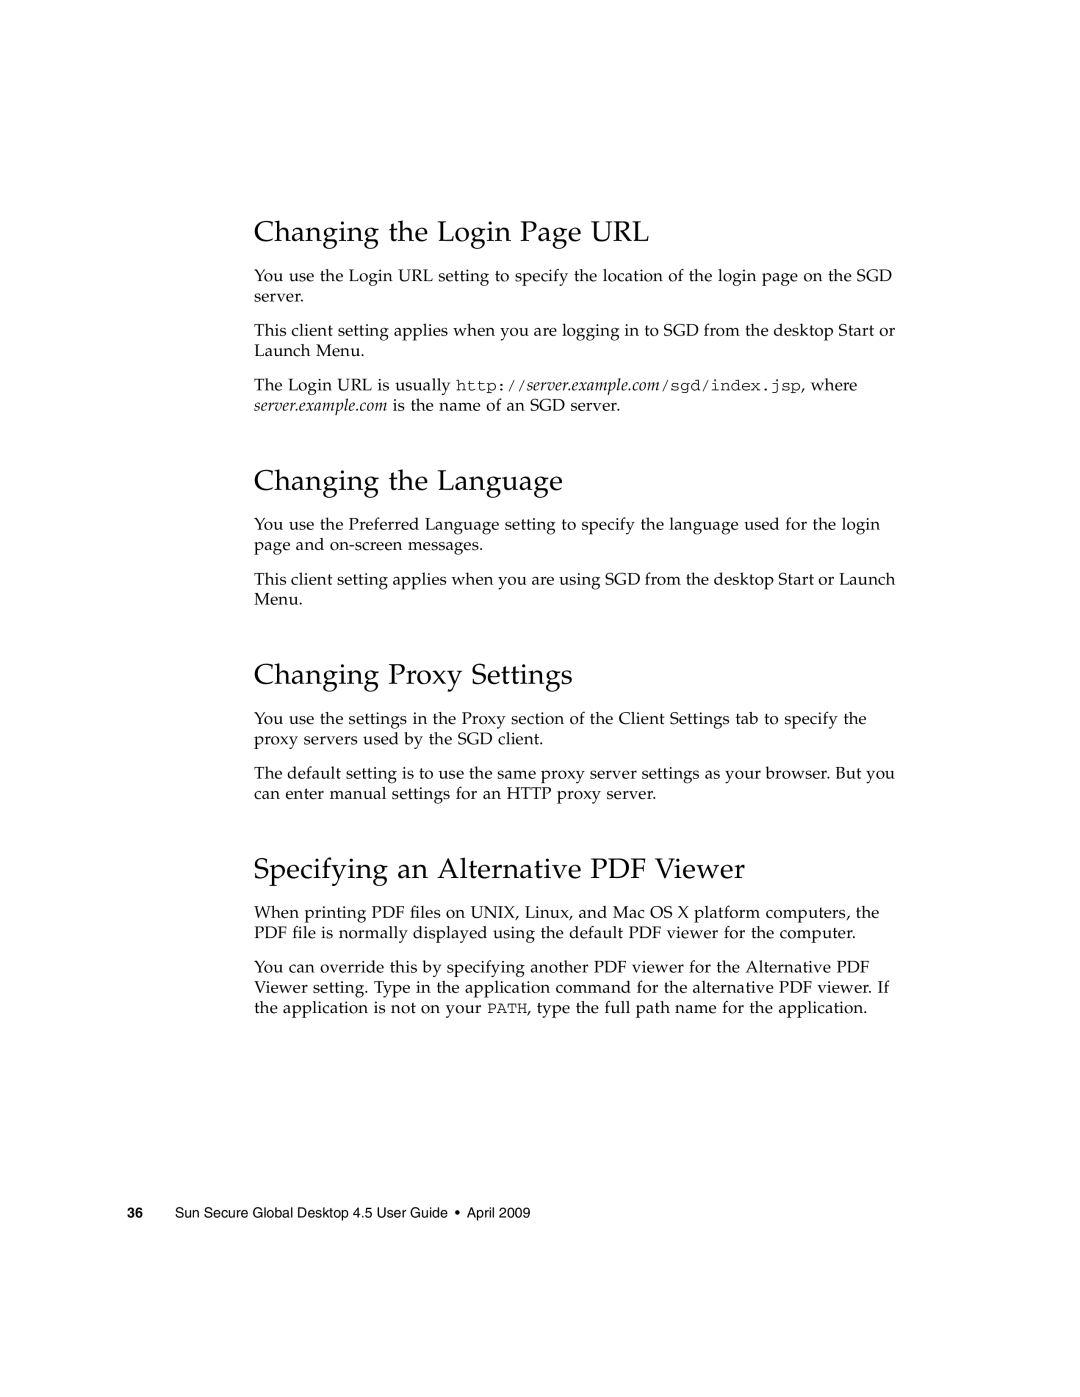 Sun Microsystems 4.5 manual Changing the Login Page URL, Changing the Language, Changing Proxy Settings 